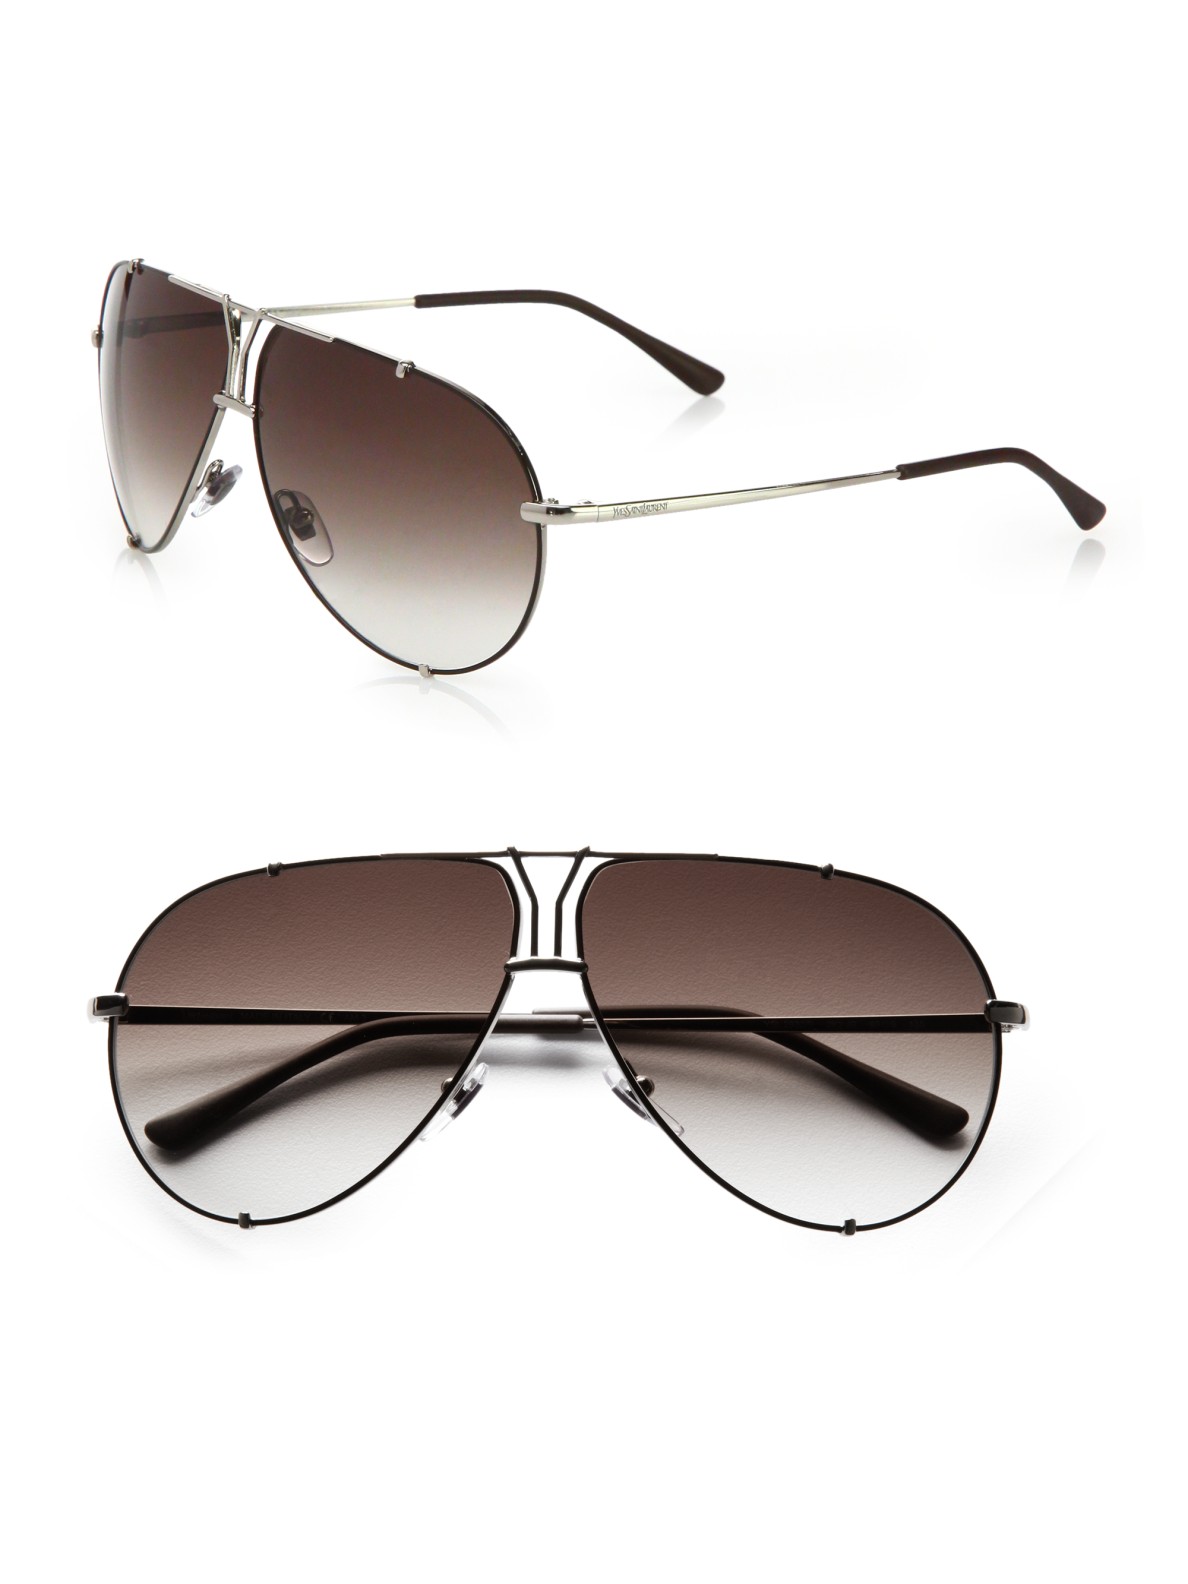 Lyst - Saint Laurent Logo Accented Metal Aviator Sunglasses in Brown for Men